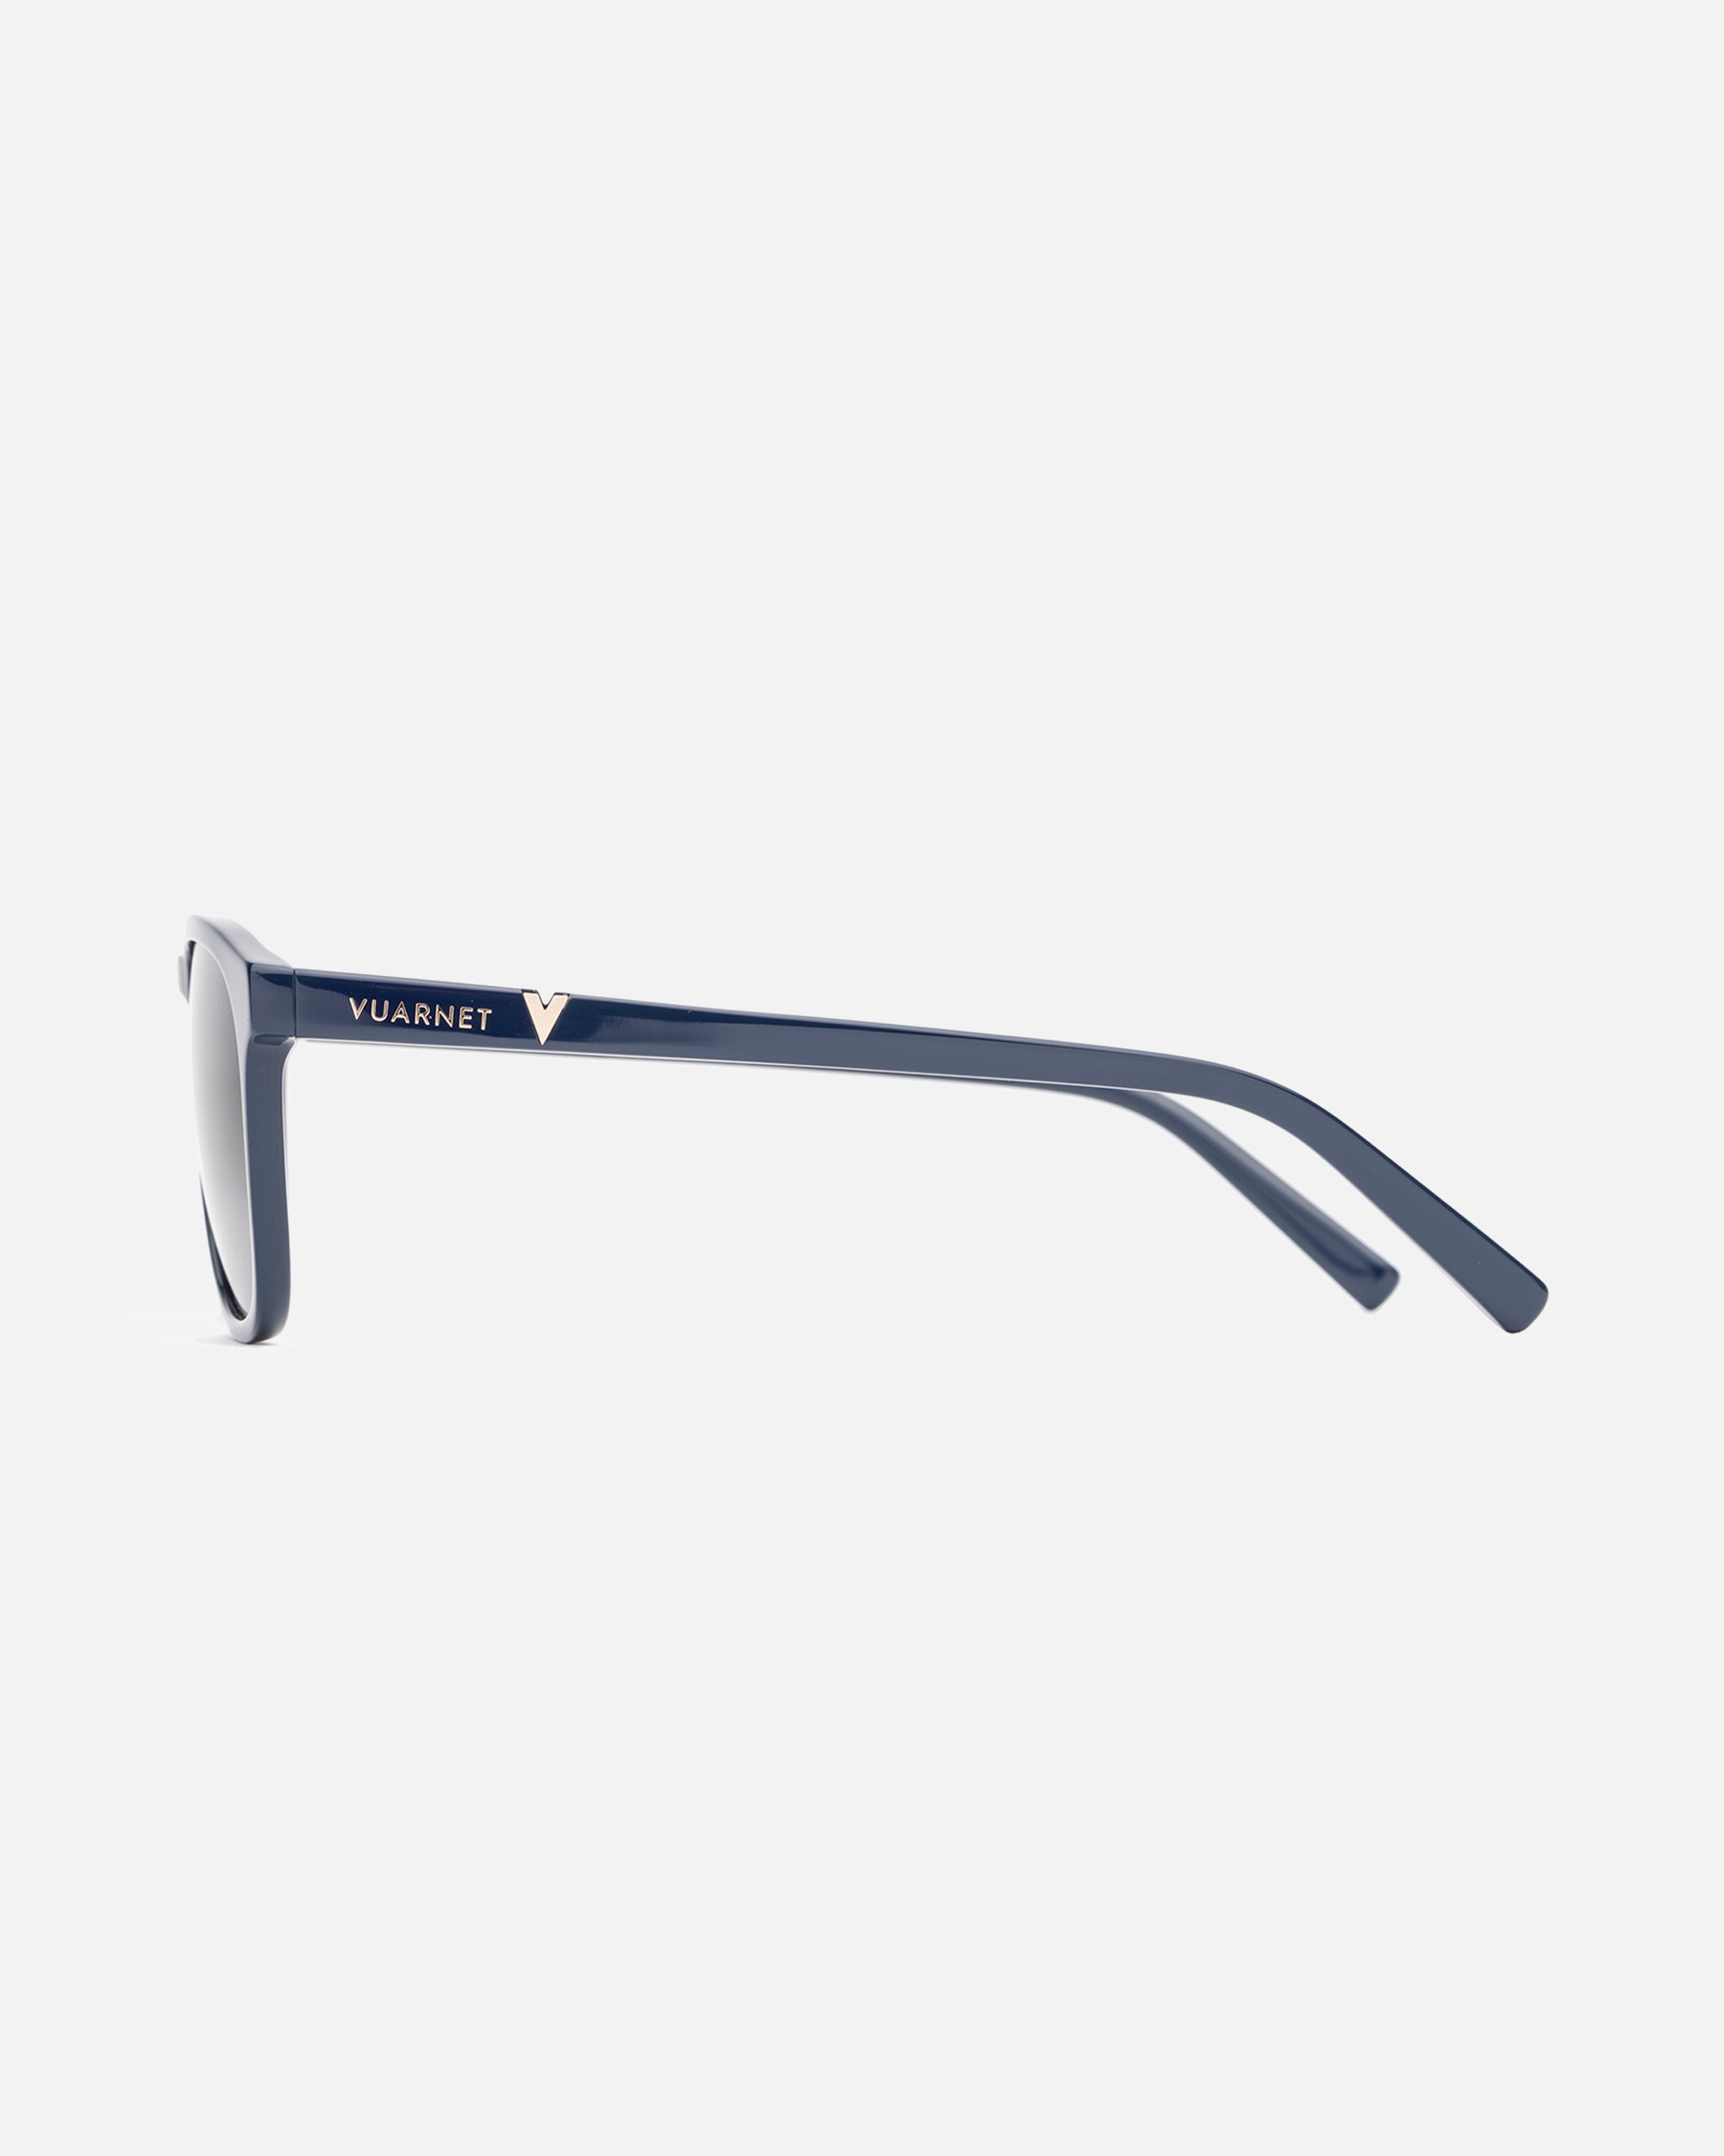 Vuarnet BELVEDERE SMALL Blue - Lifestyle Sunglasses